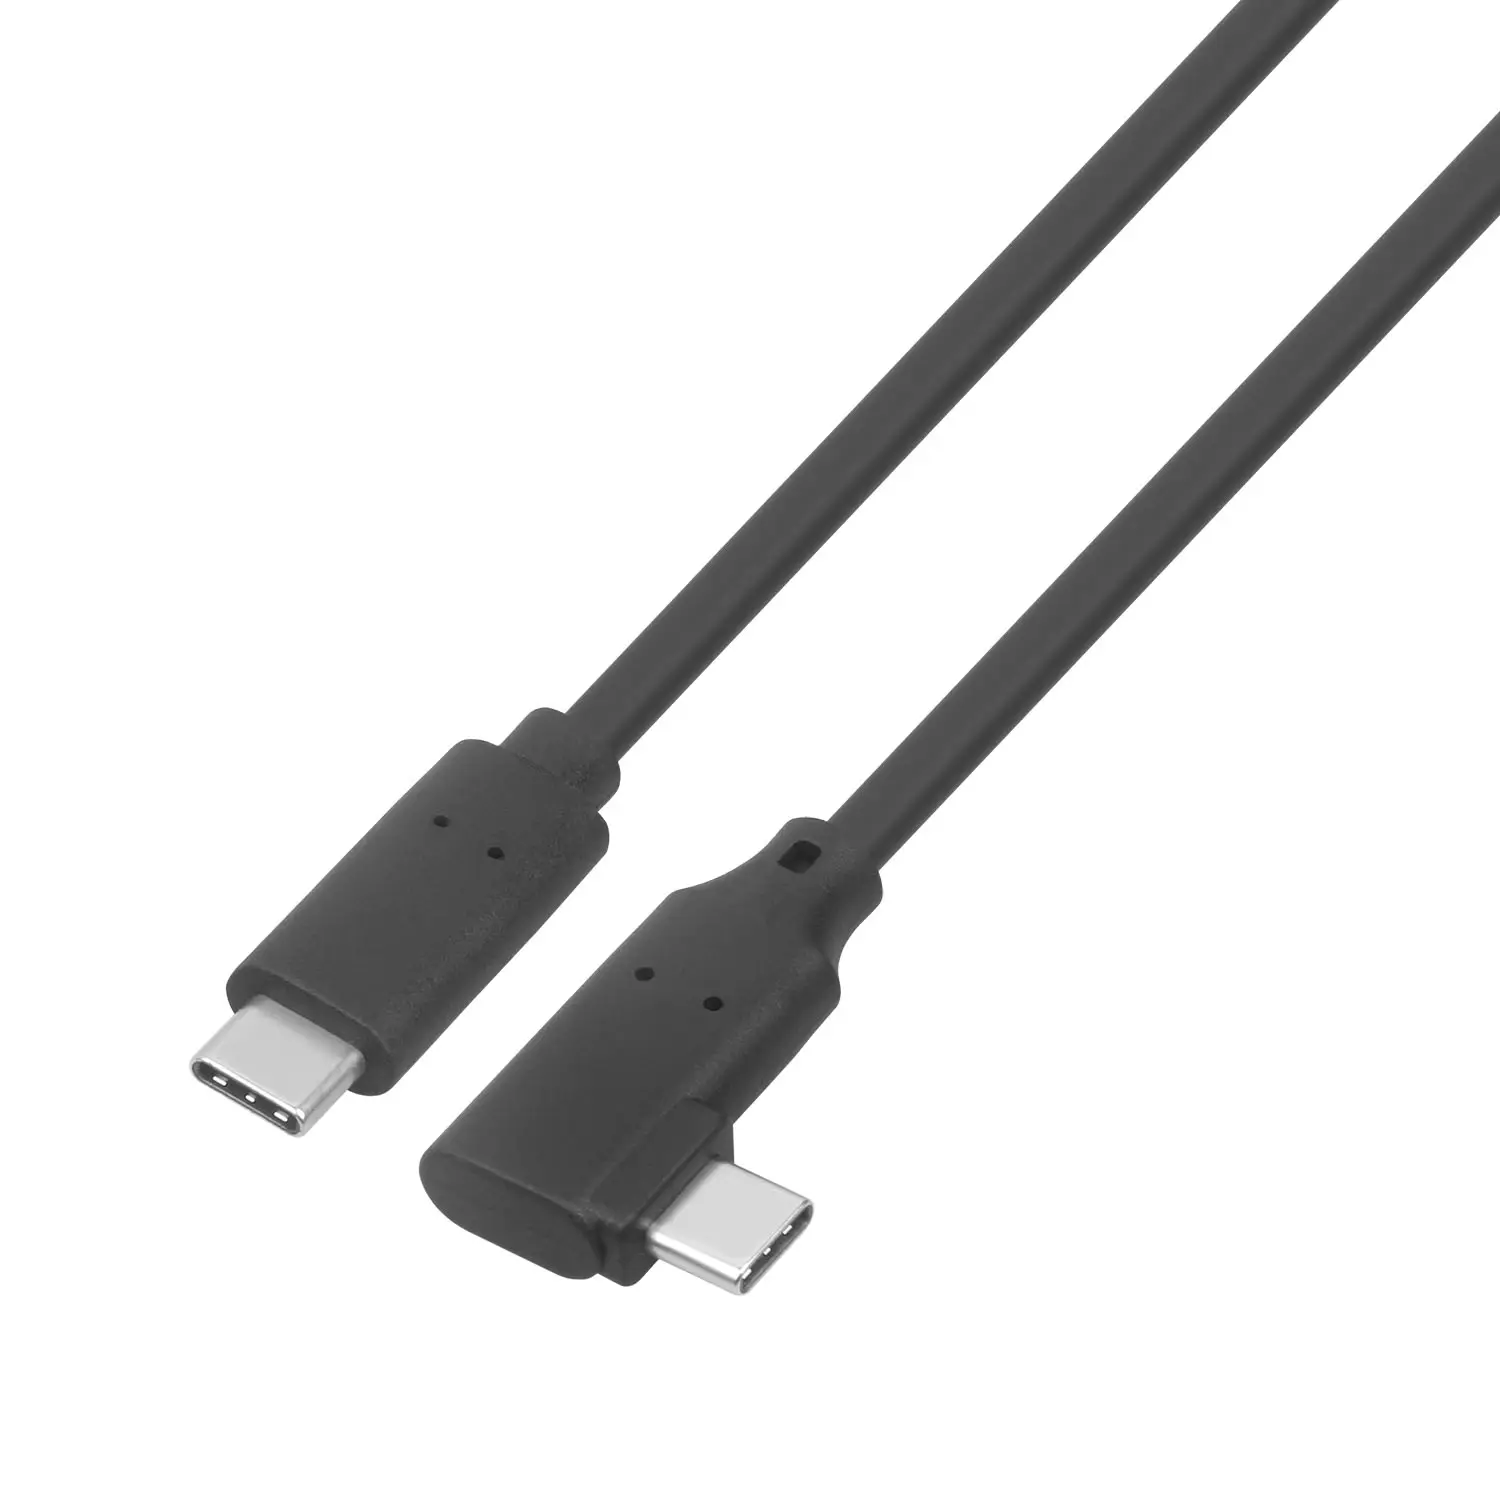 Kabel USB Tipe C cepat 1M, kabel pengisian daya USB Tipe C sudut fleksibel untuk Android, Data USB Tipe C